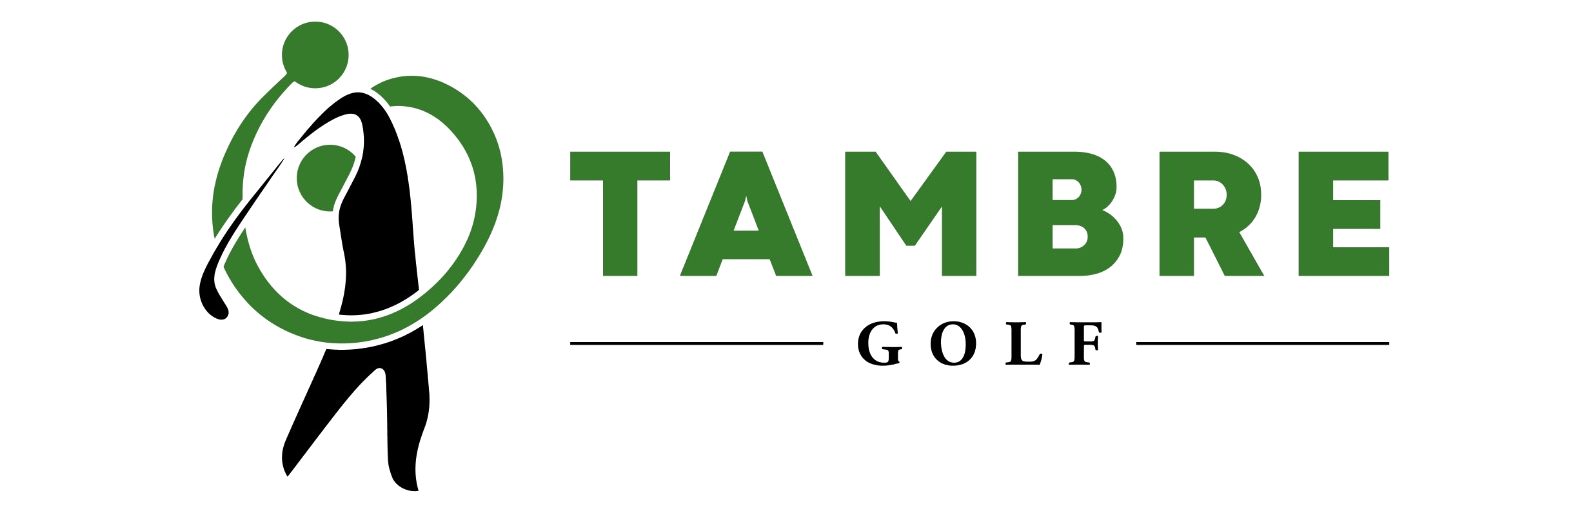 Reservas Tambre Golf - JS Golf Academy - Registro